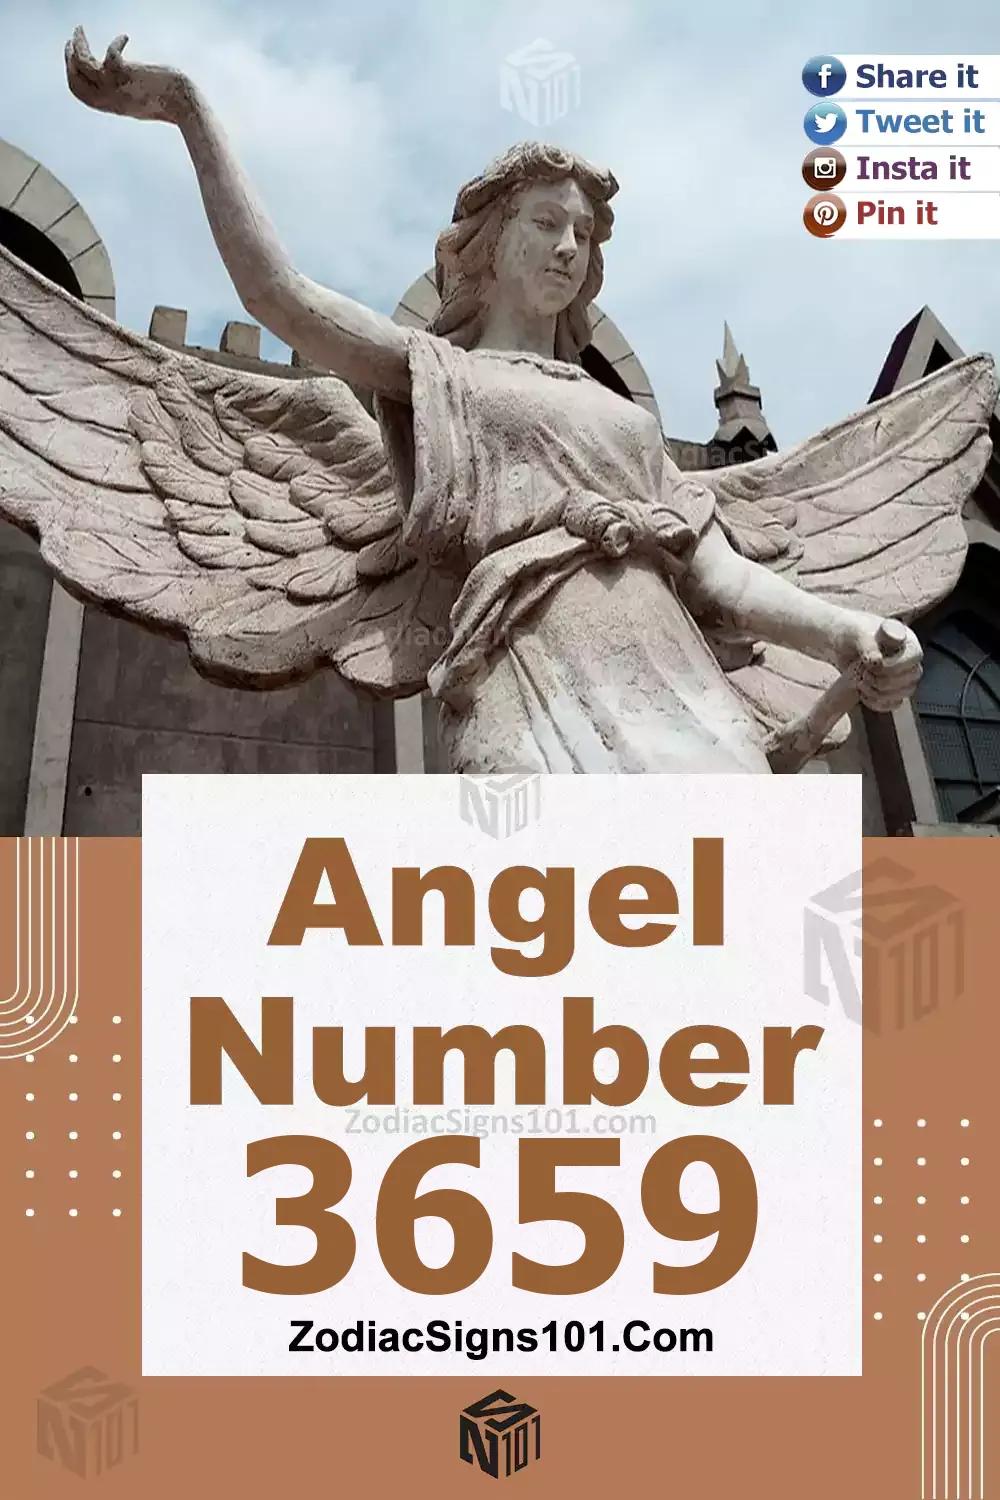 3659-Angel-Number-Meaning.jpg